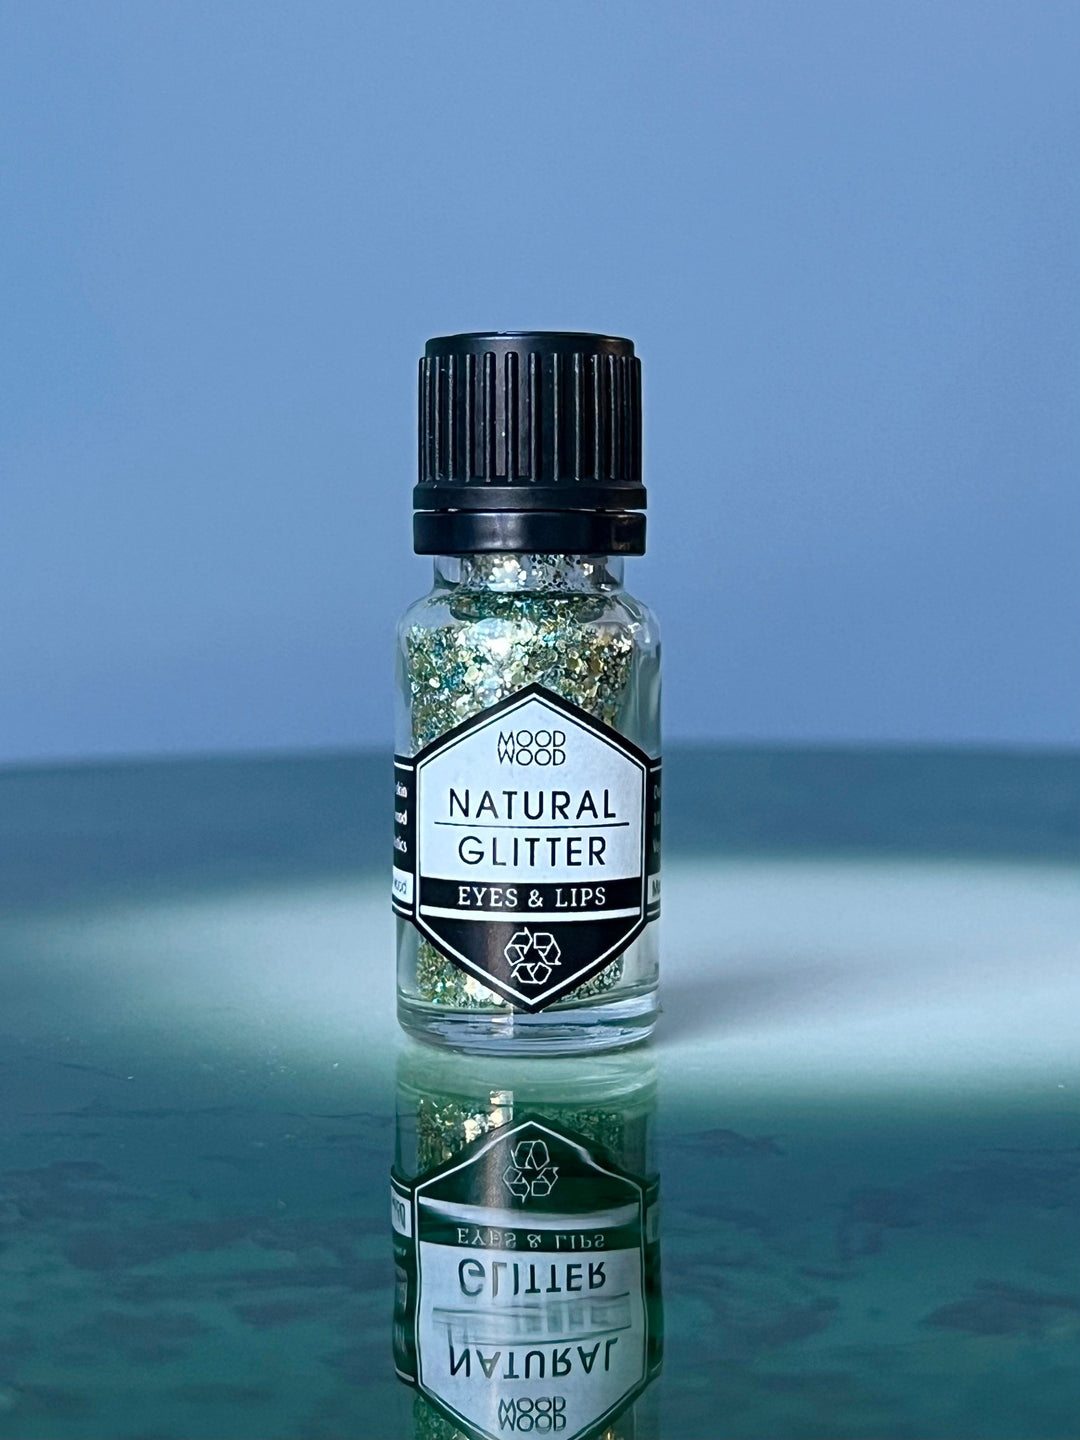 Moodwood Glittersminke Natural Glitter - mint